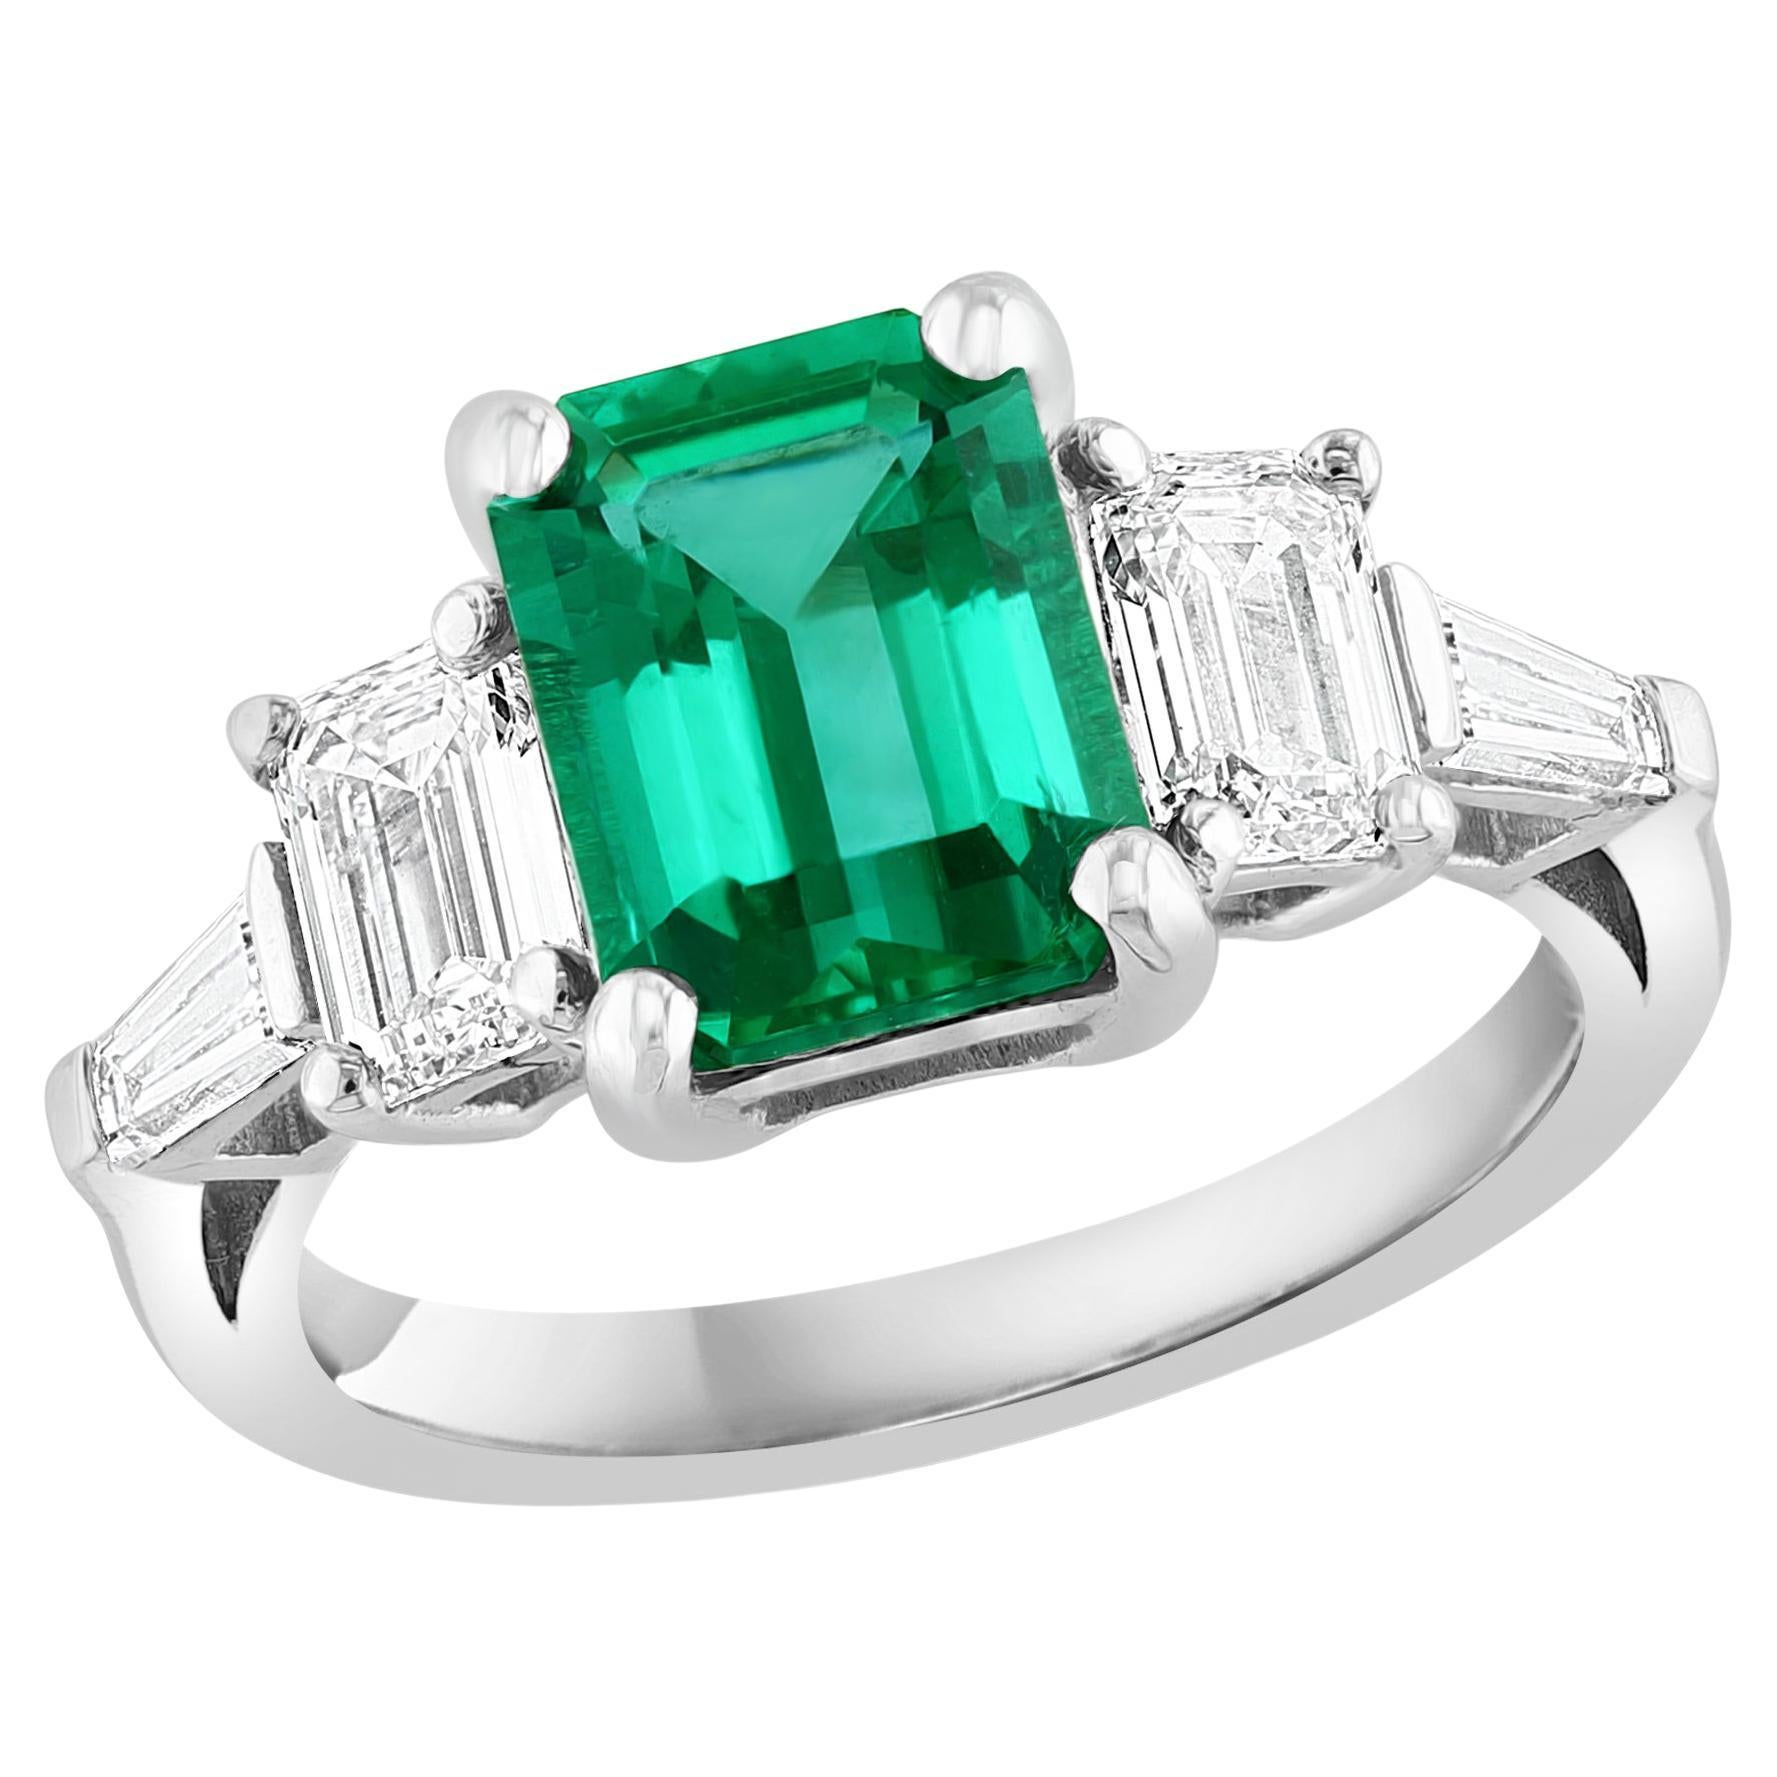 2.73 Carat Emerald Cut Emerald & Diamond Five-Stone Engagement Ring in Platinum For Sale